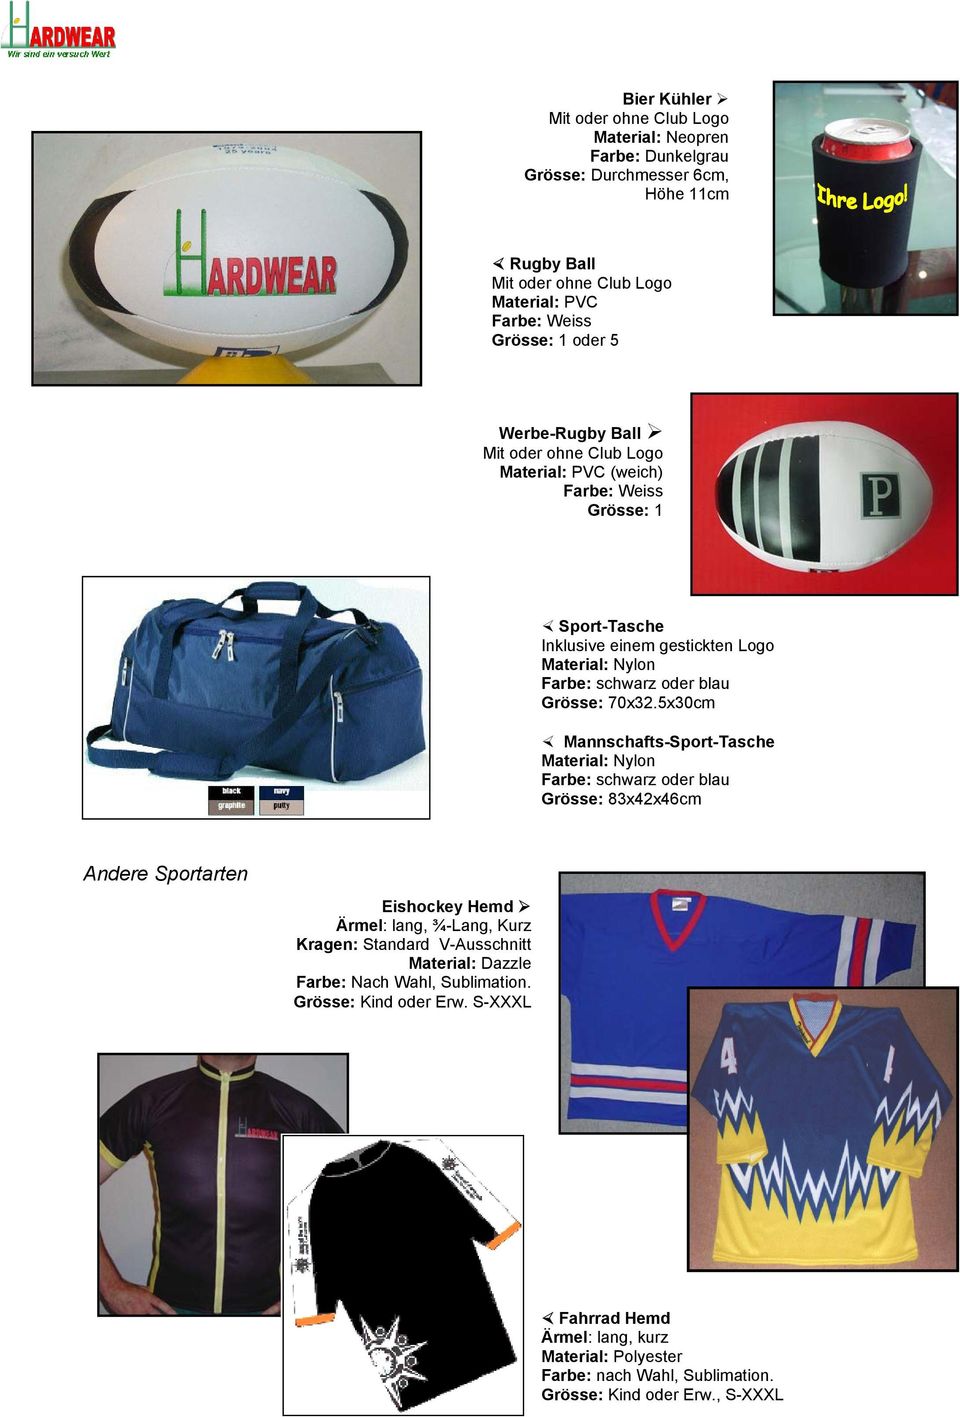 5x30cm Mannschafts-Sport-Tasche Material: Nylon Farbe: schwarz oder blau Grösse: 83x42x46cm Andere Sportarten Eishockey Hemd Ärmel: lang, ¾-Lang, Kurz